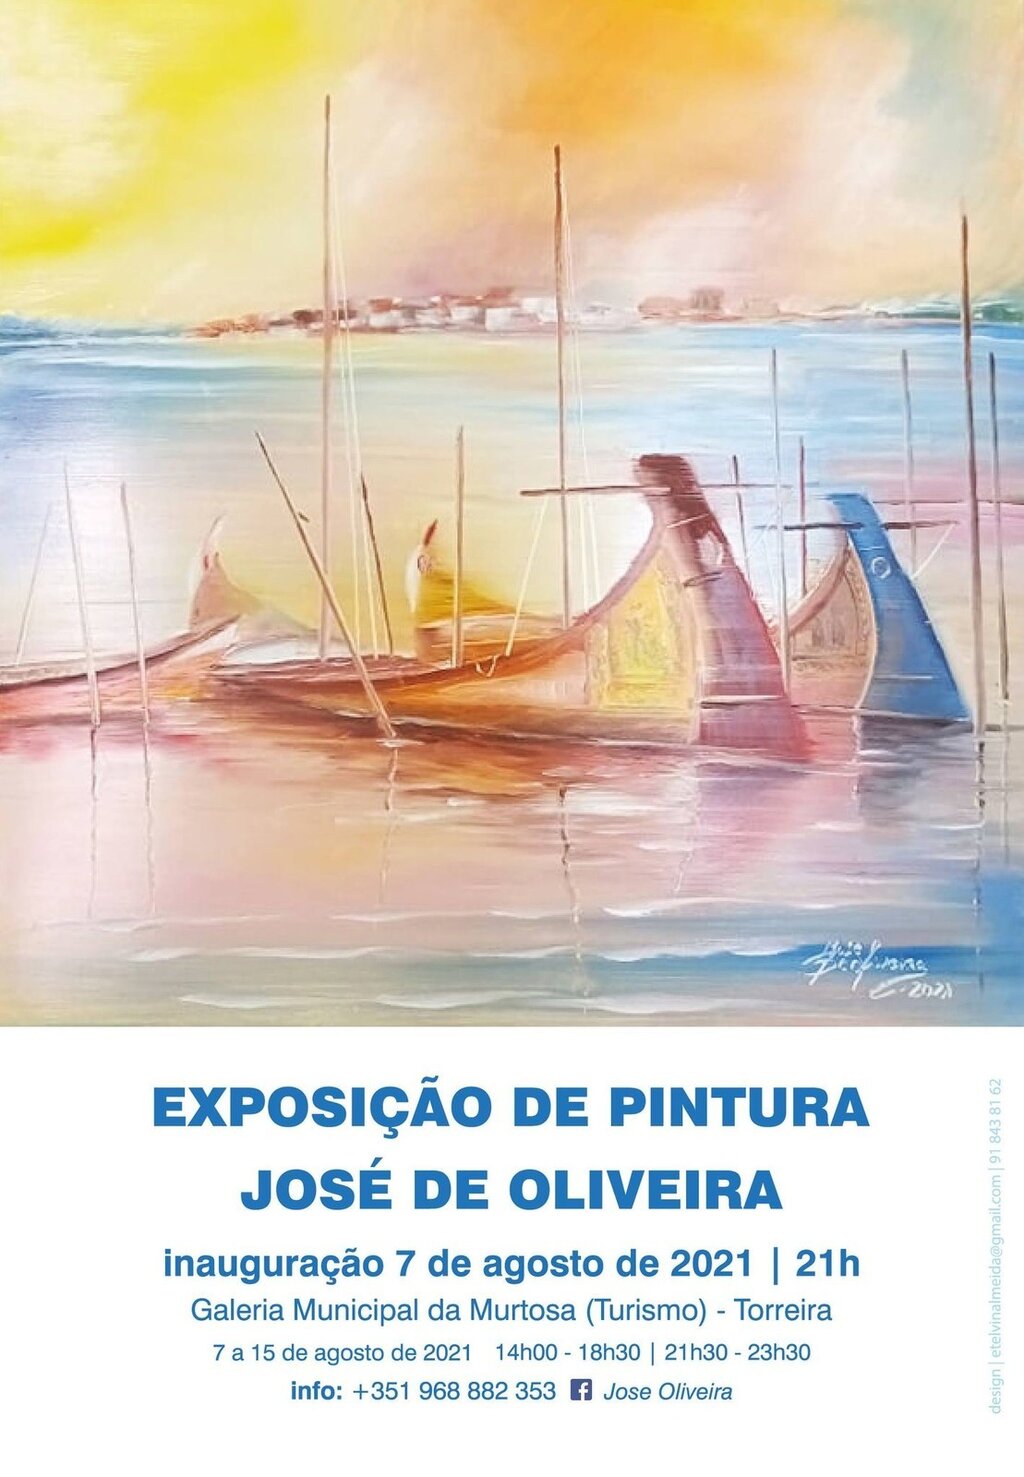 JOSÉ DE OLIVEIRA EXPÕE NA GALERIA MUNICIPAL